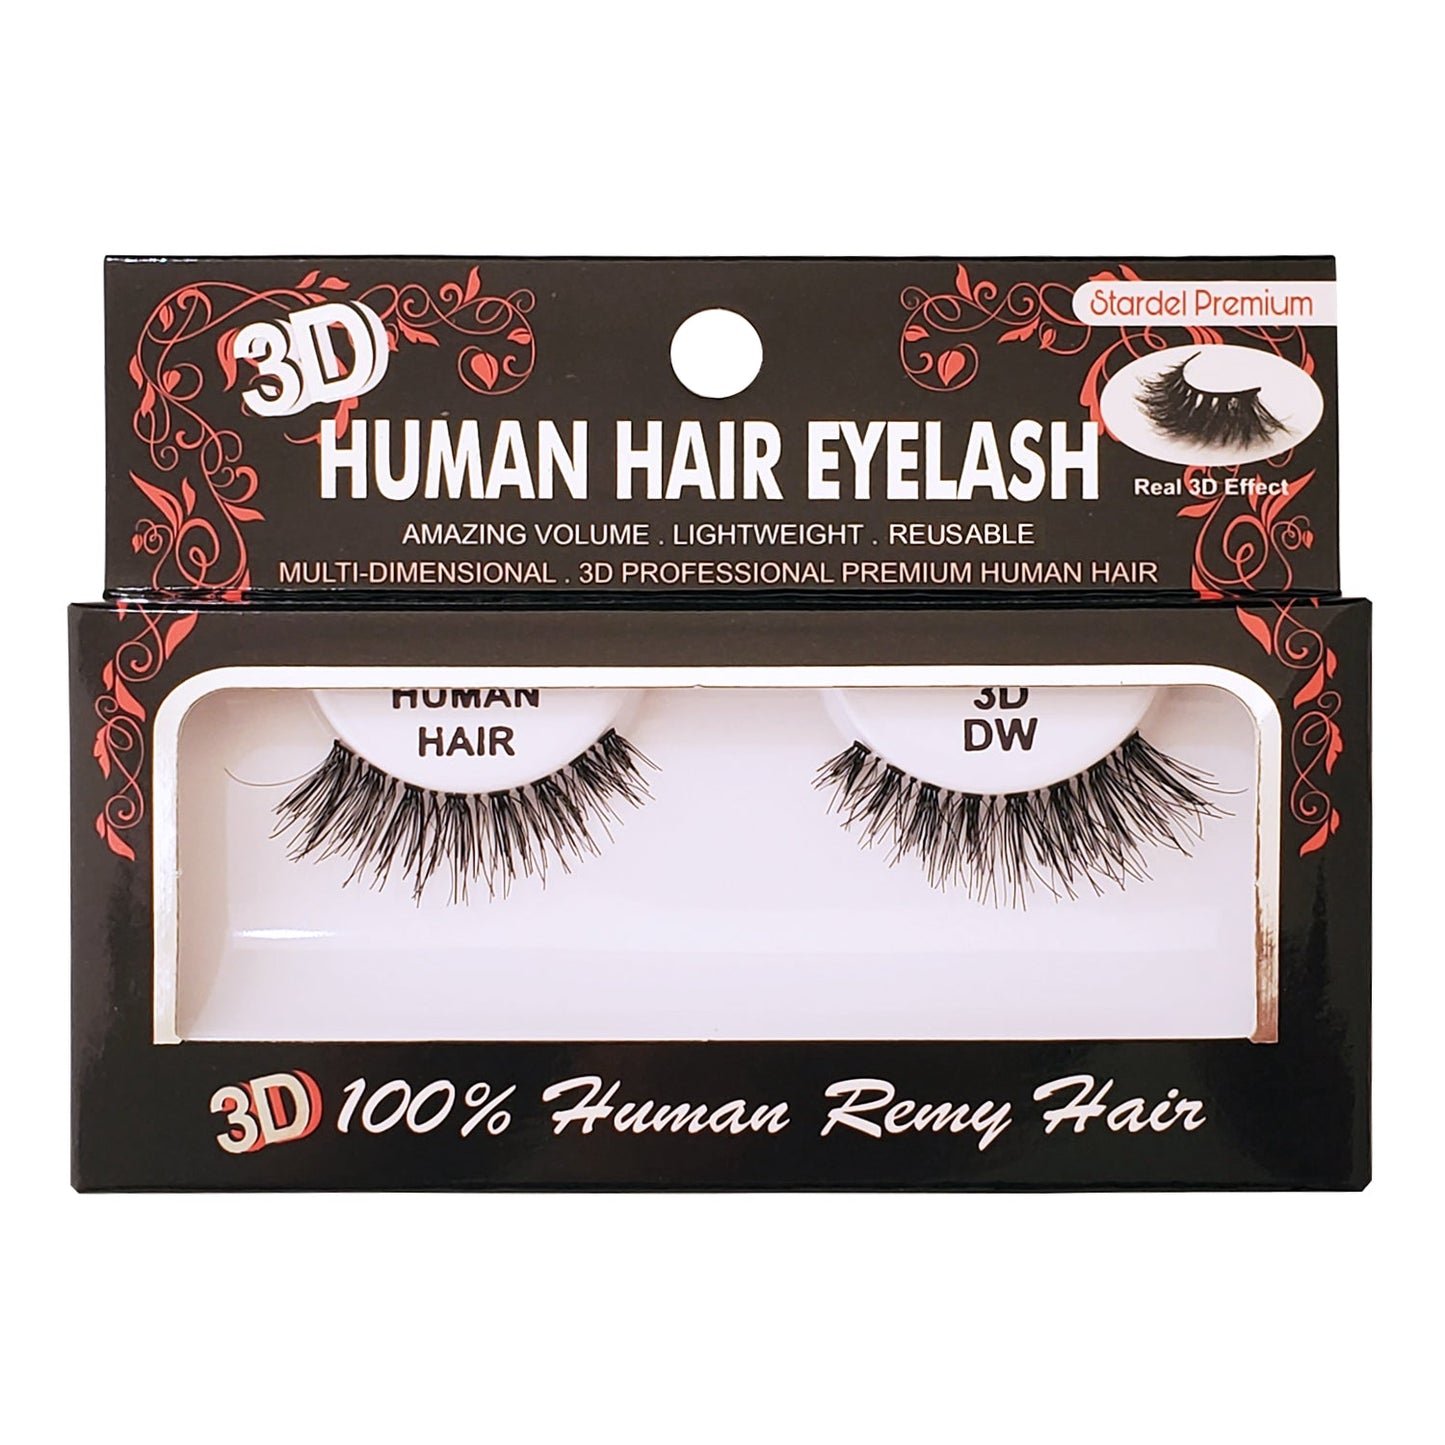 #3D DW - 100% Human Remy Hair Eyelash